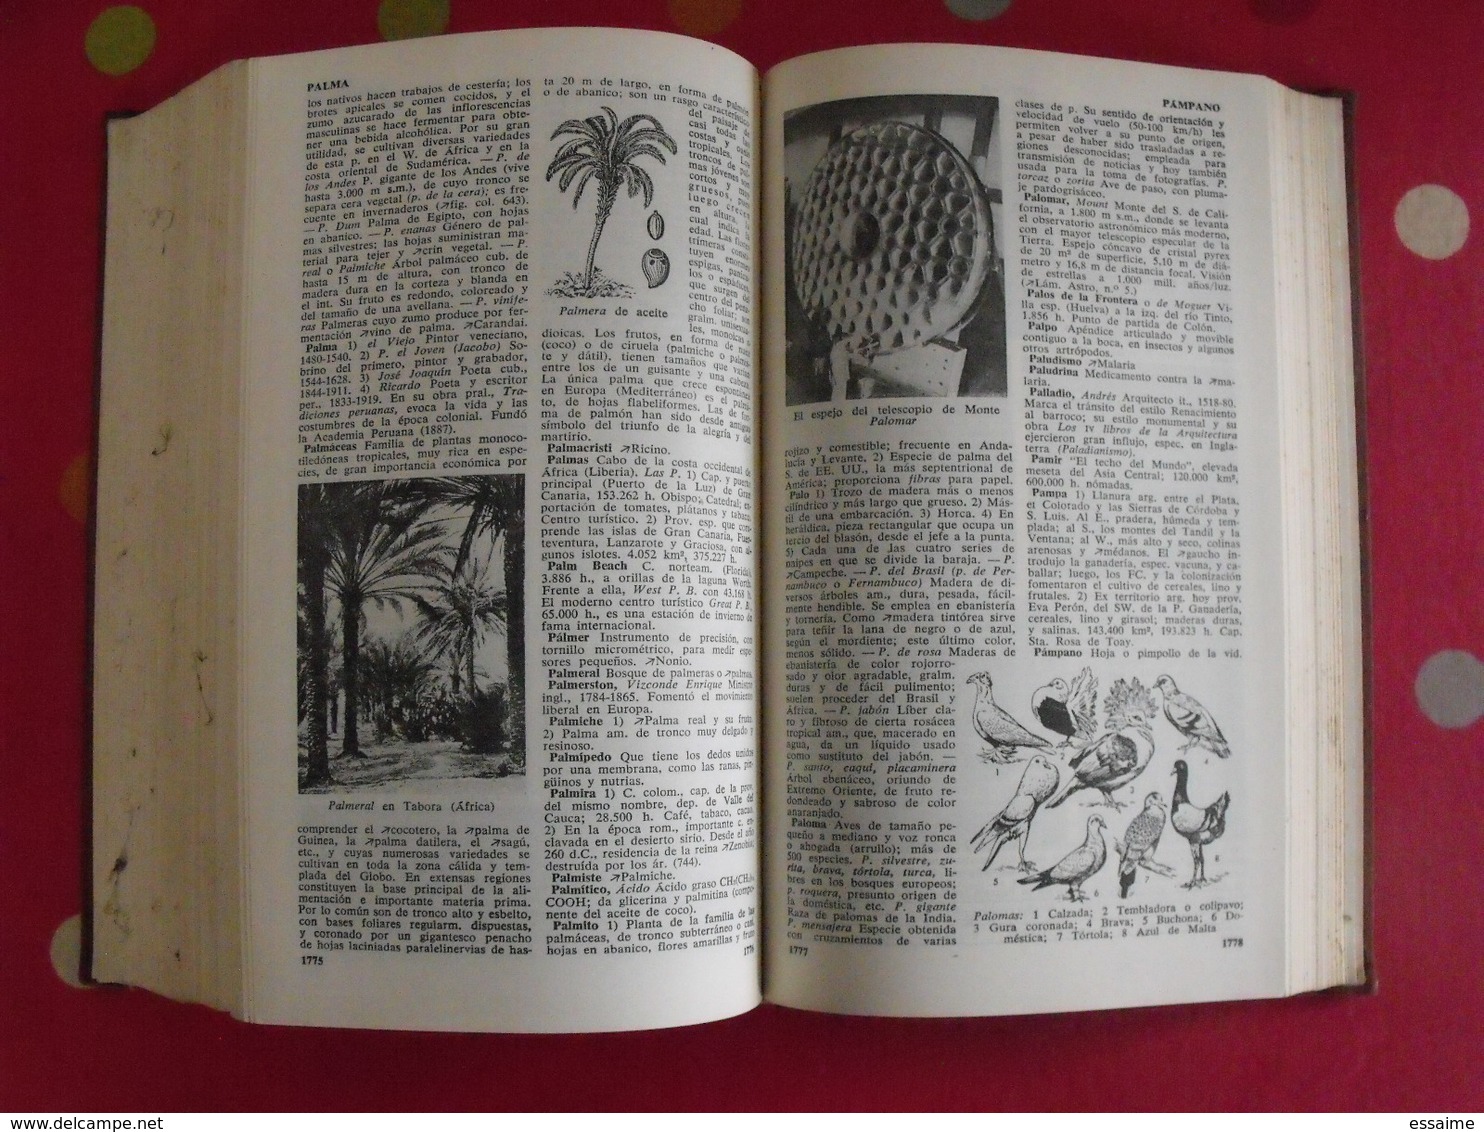 Enciclopedia Universal Herder. Barcelona 1954. Dictionnaire En Espagnol - Dictionaries